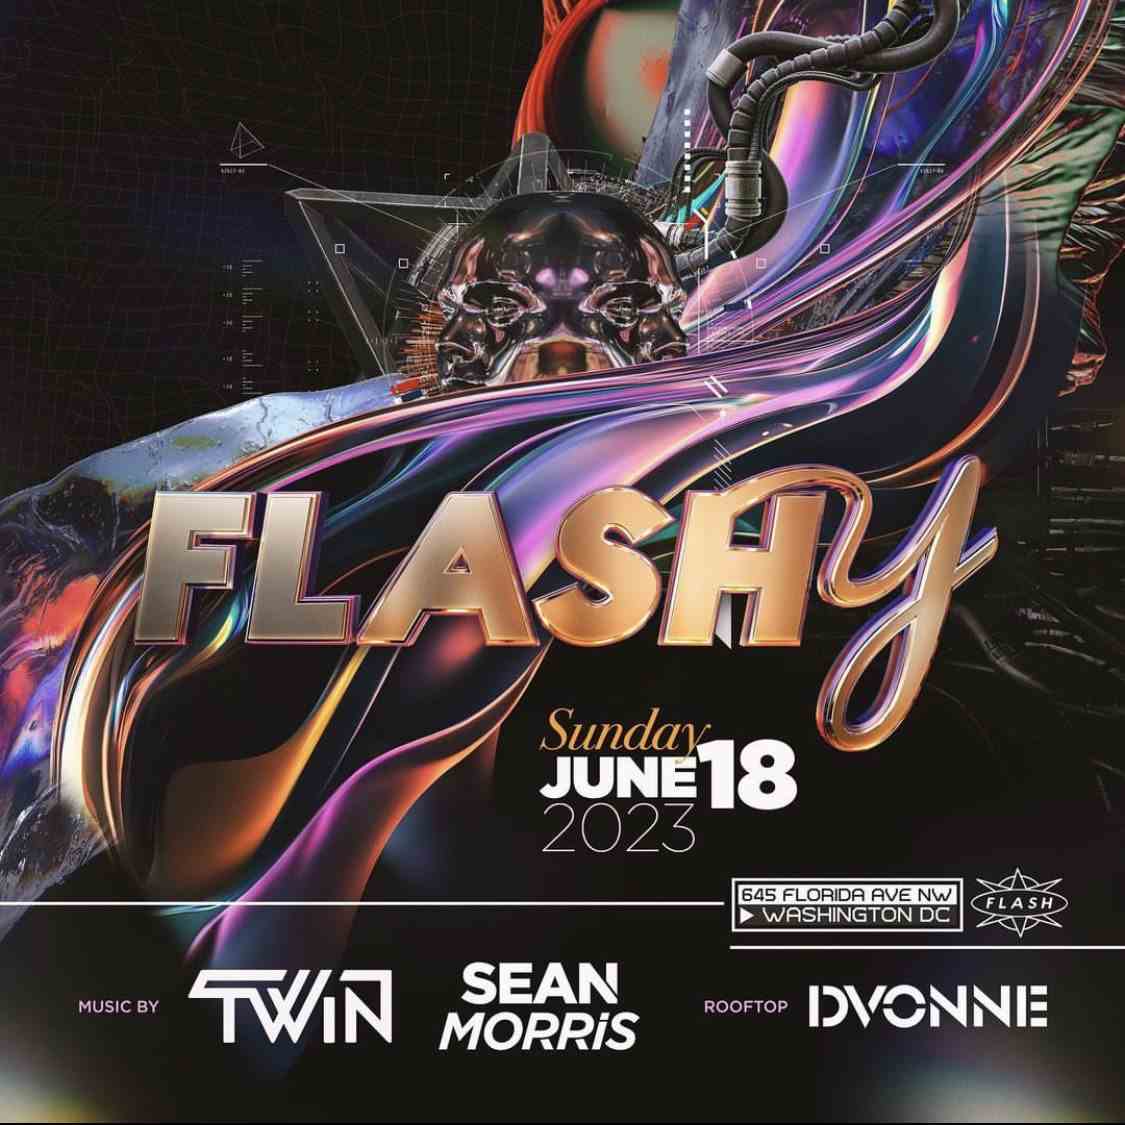 Flashy! event flyer